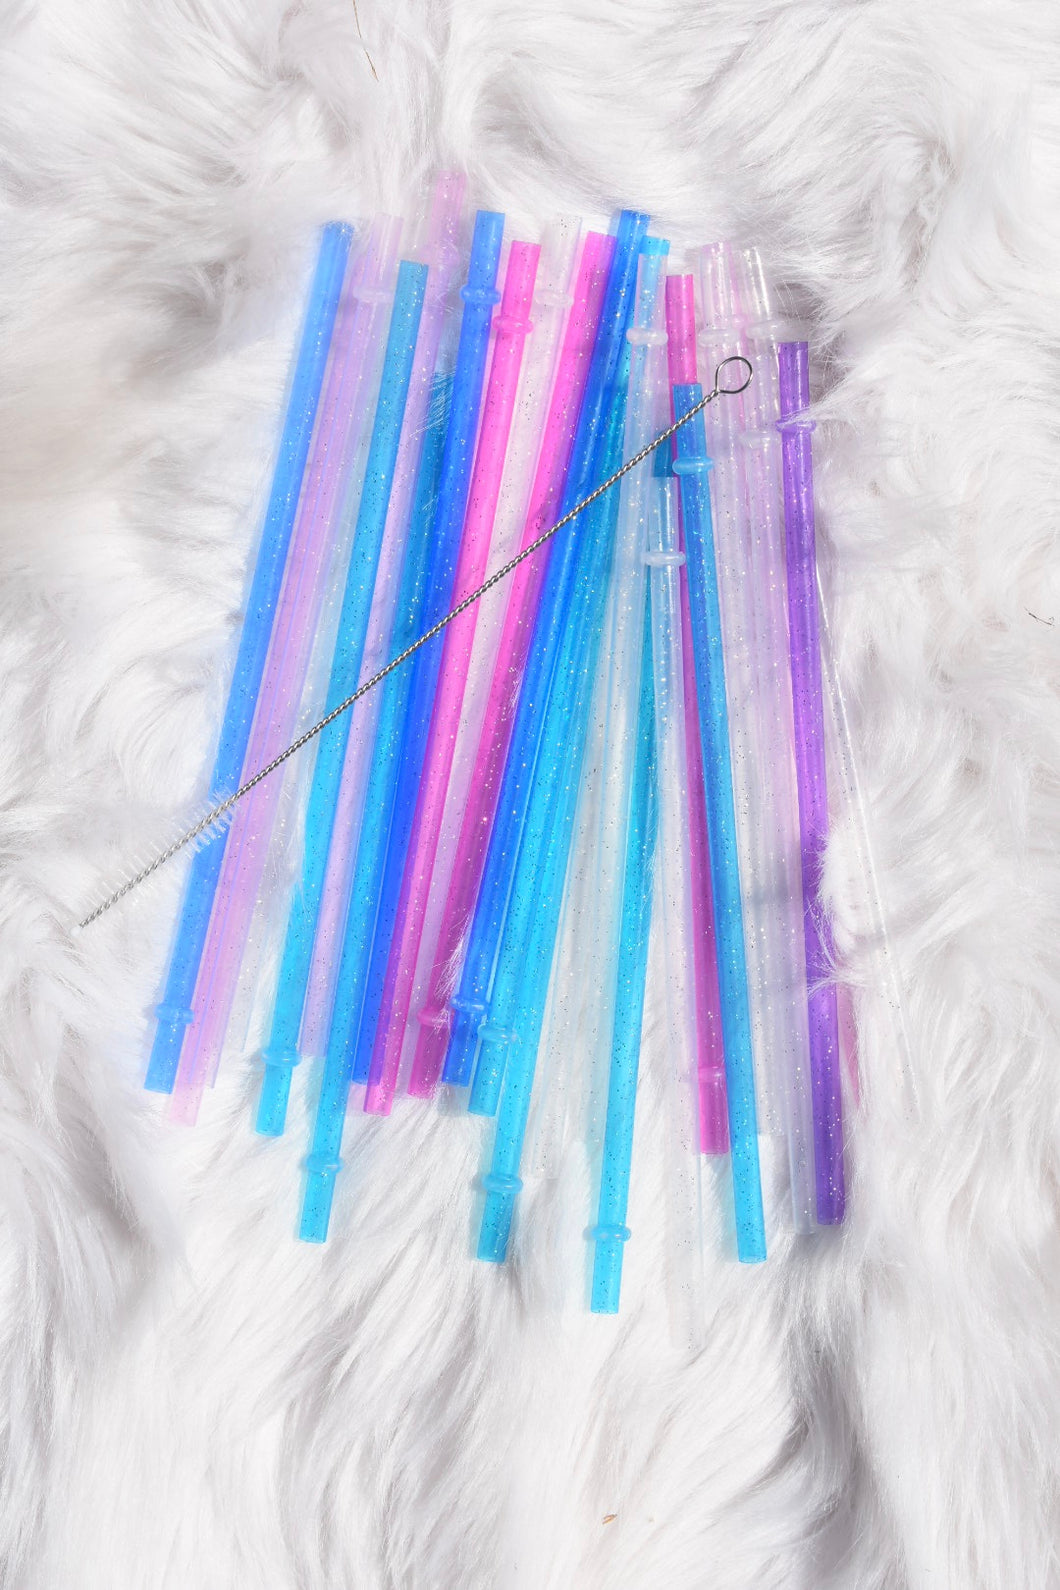 Glitter Sparkle Straws